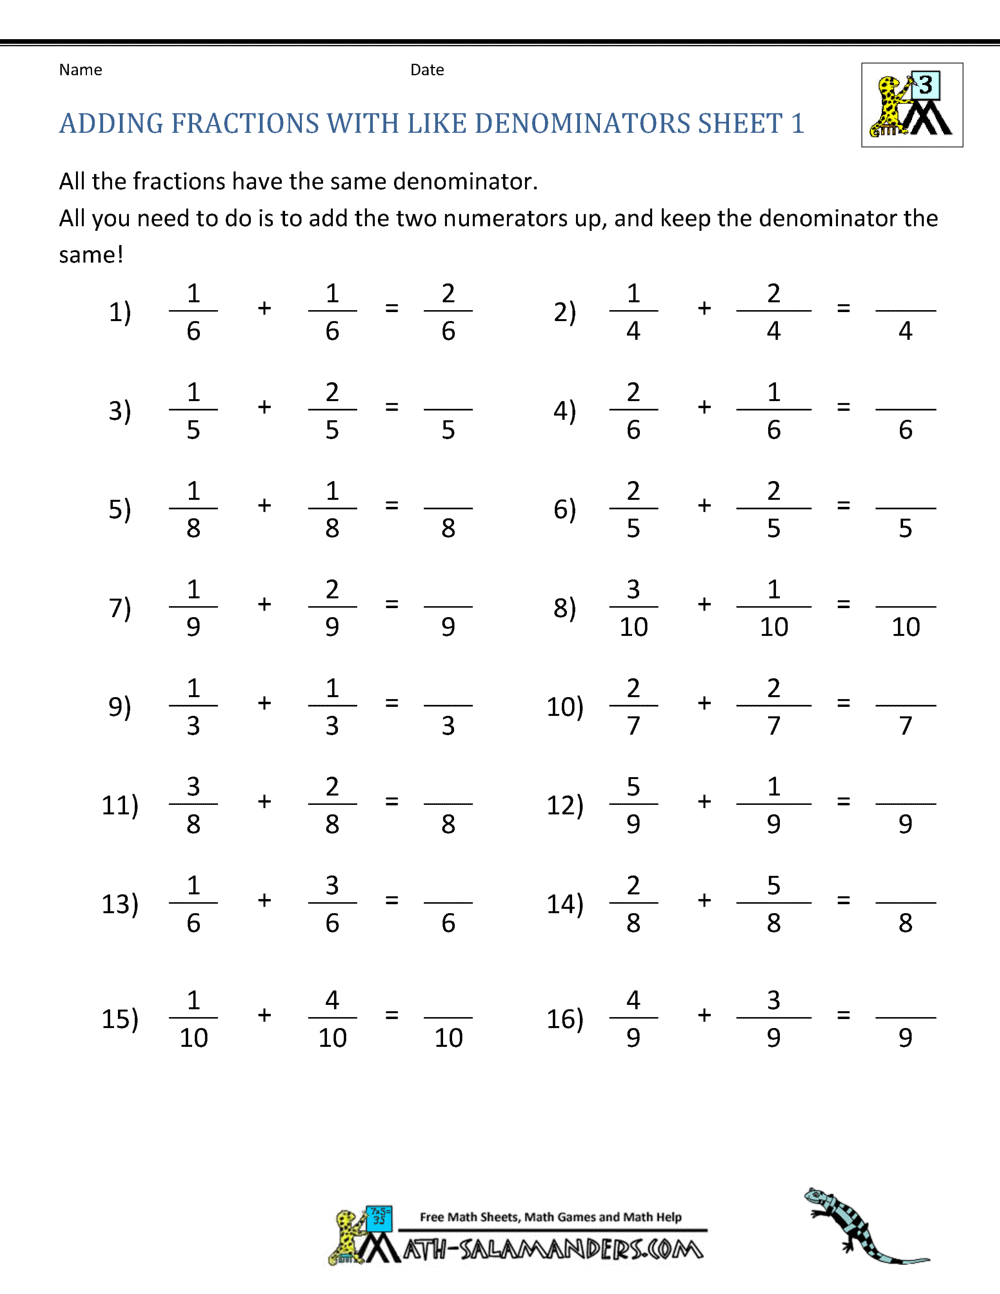 Adding fraction homework help